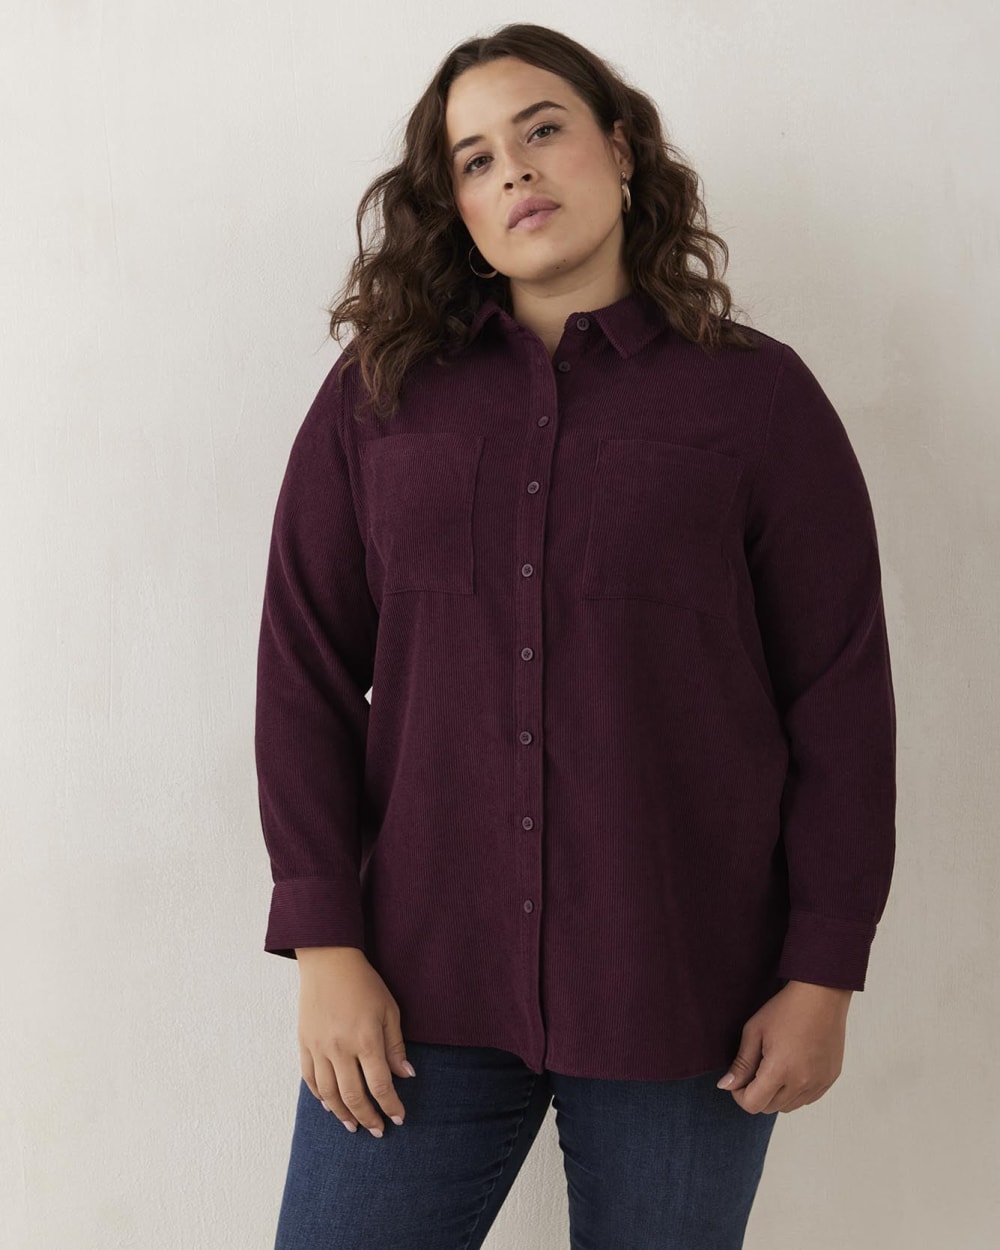 Corduroy Shirt with High-Low Hem